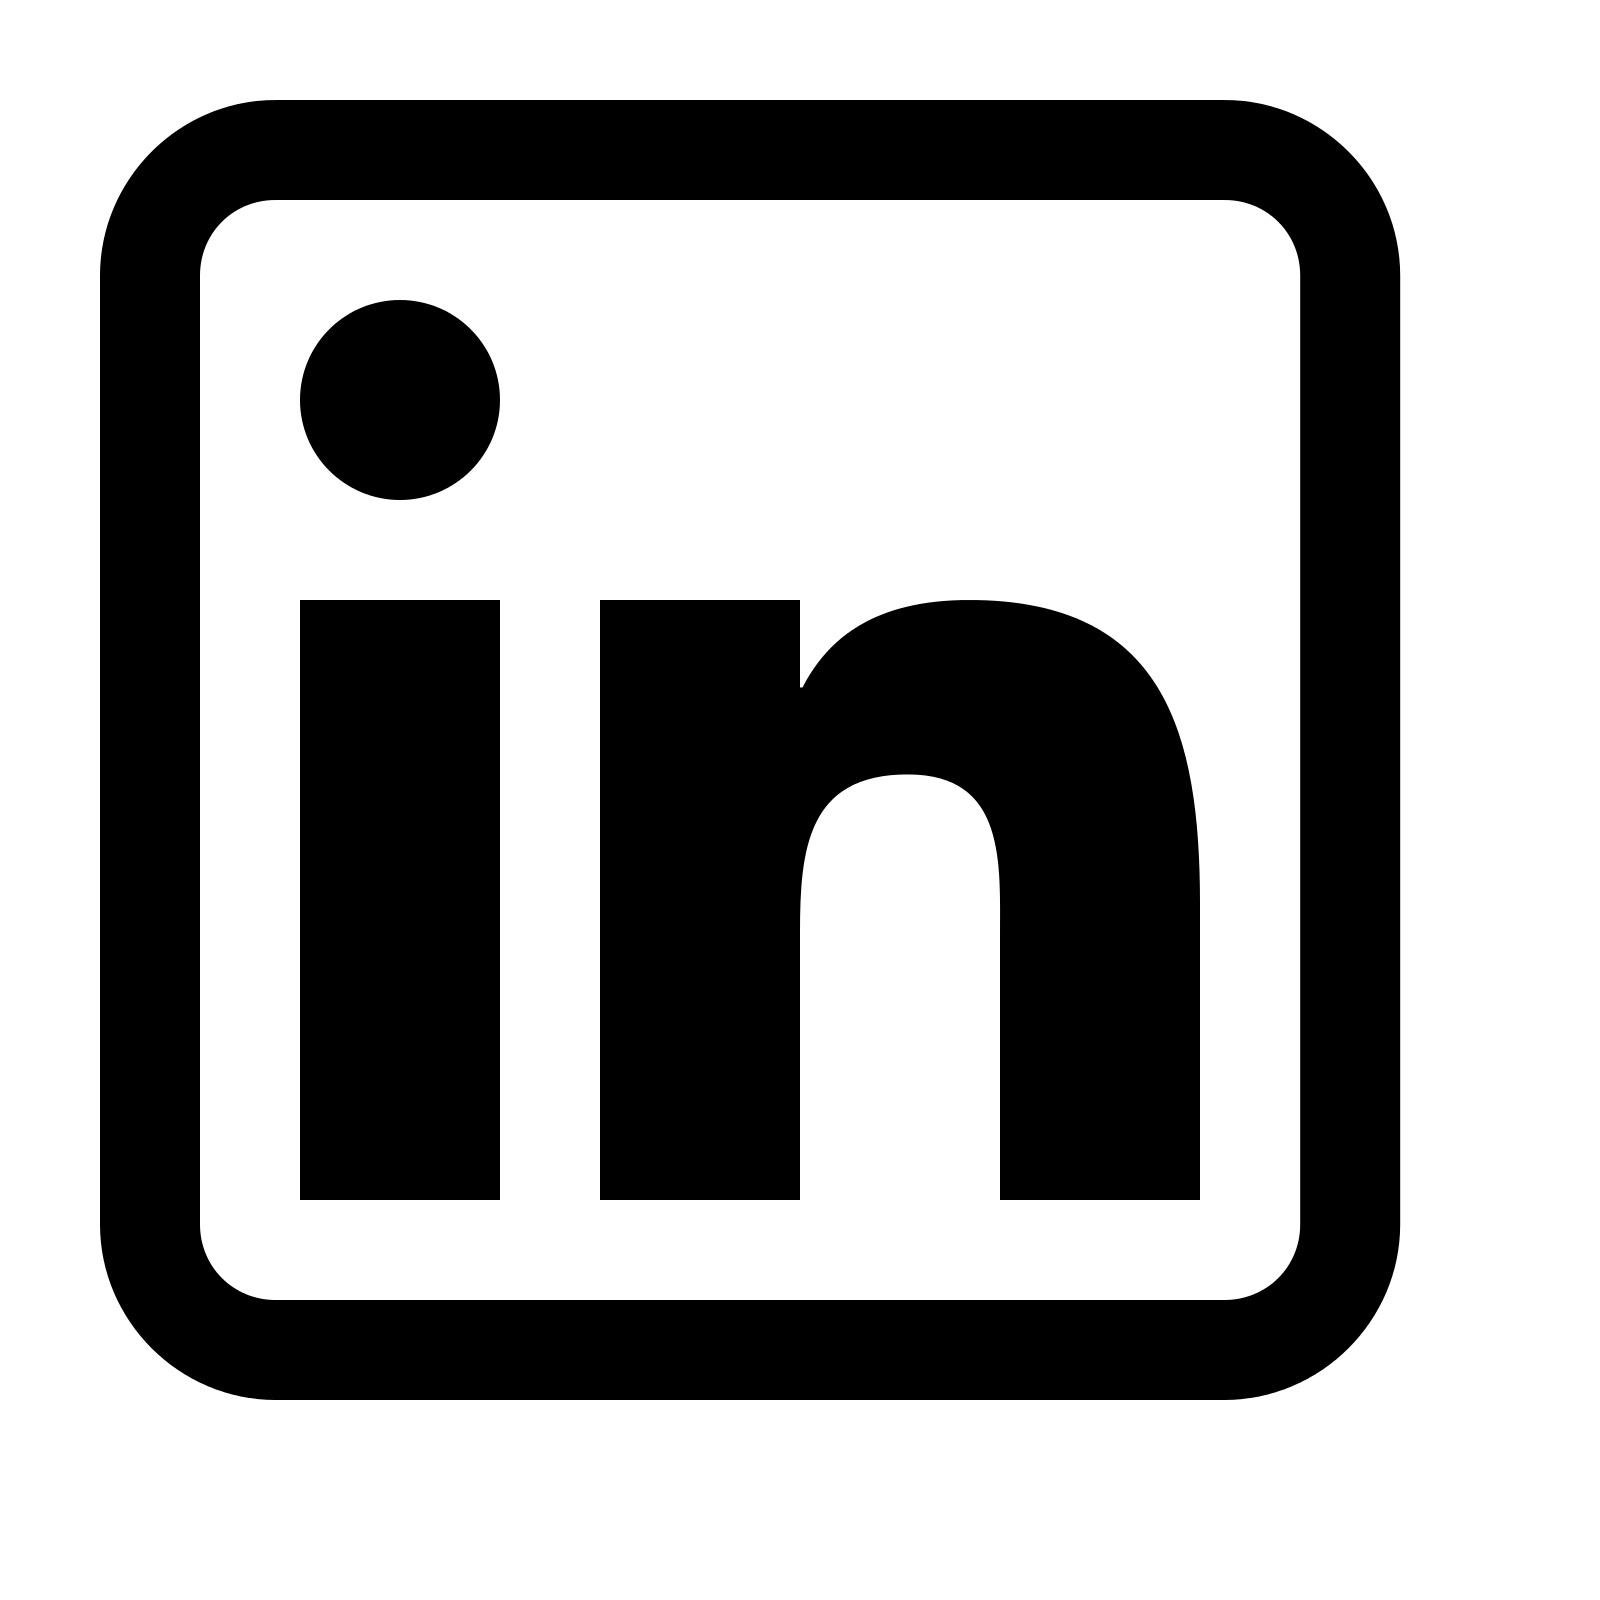 linkedin logo clicks icon png